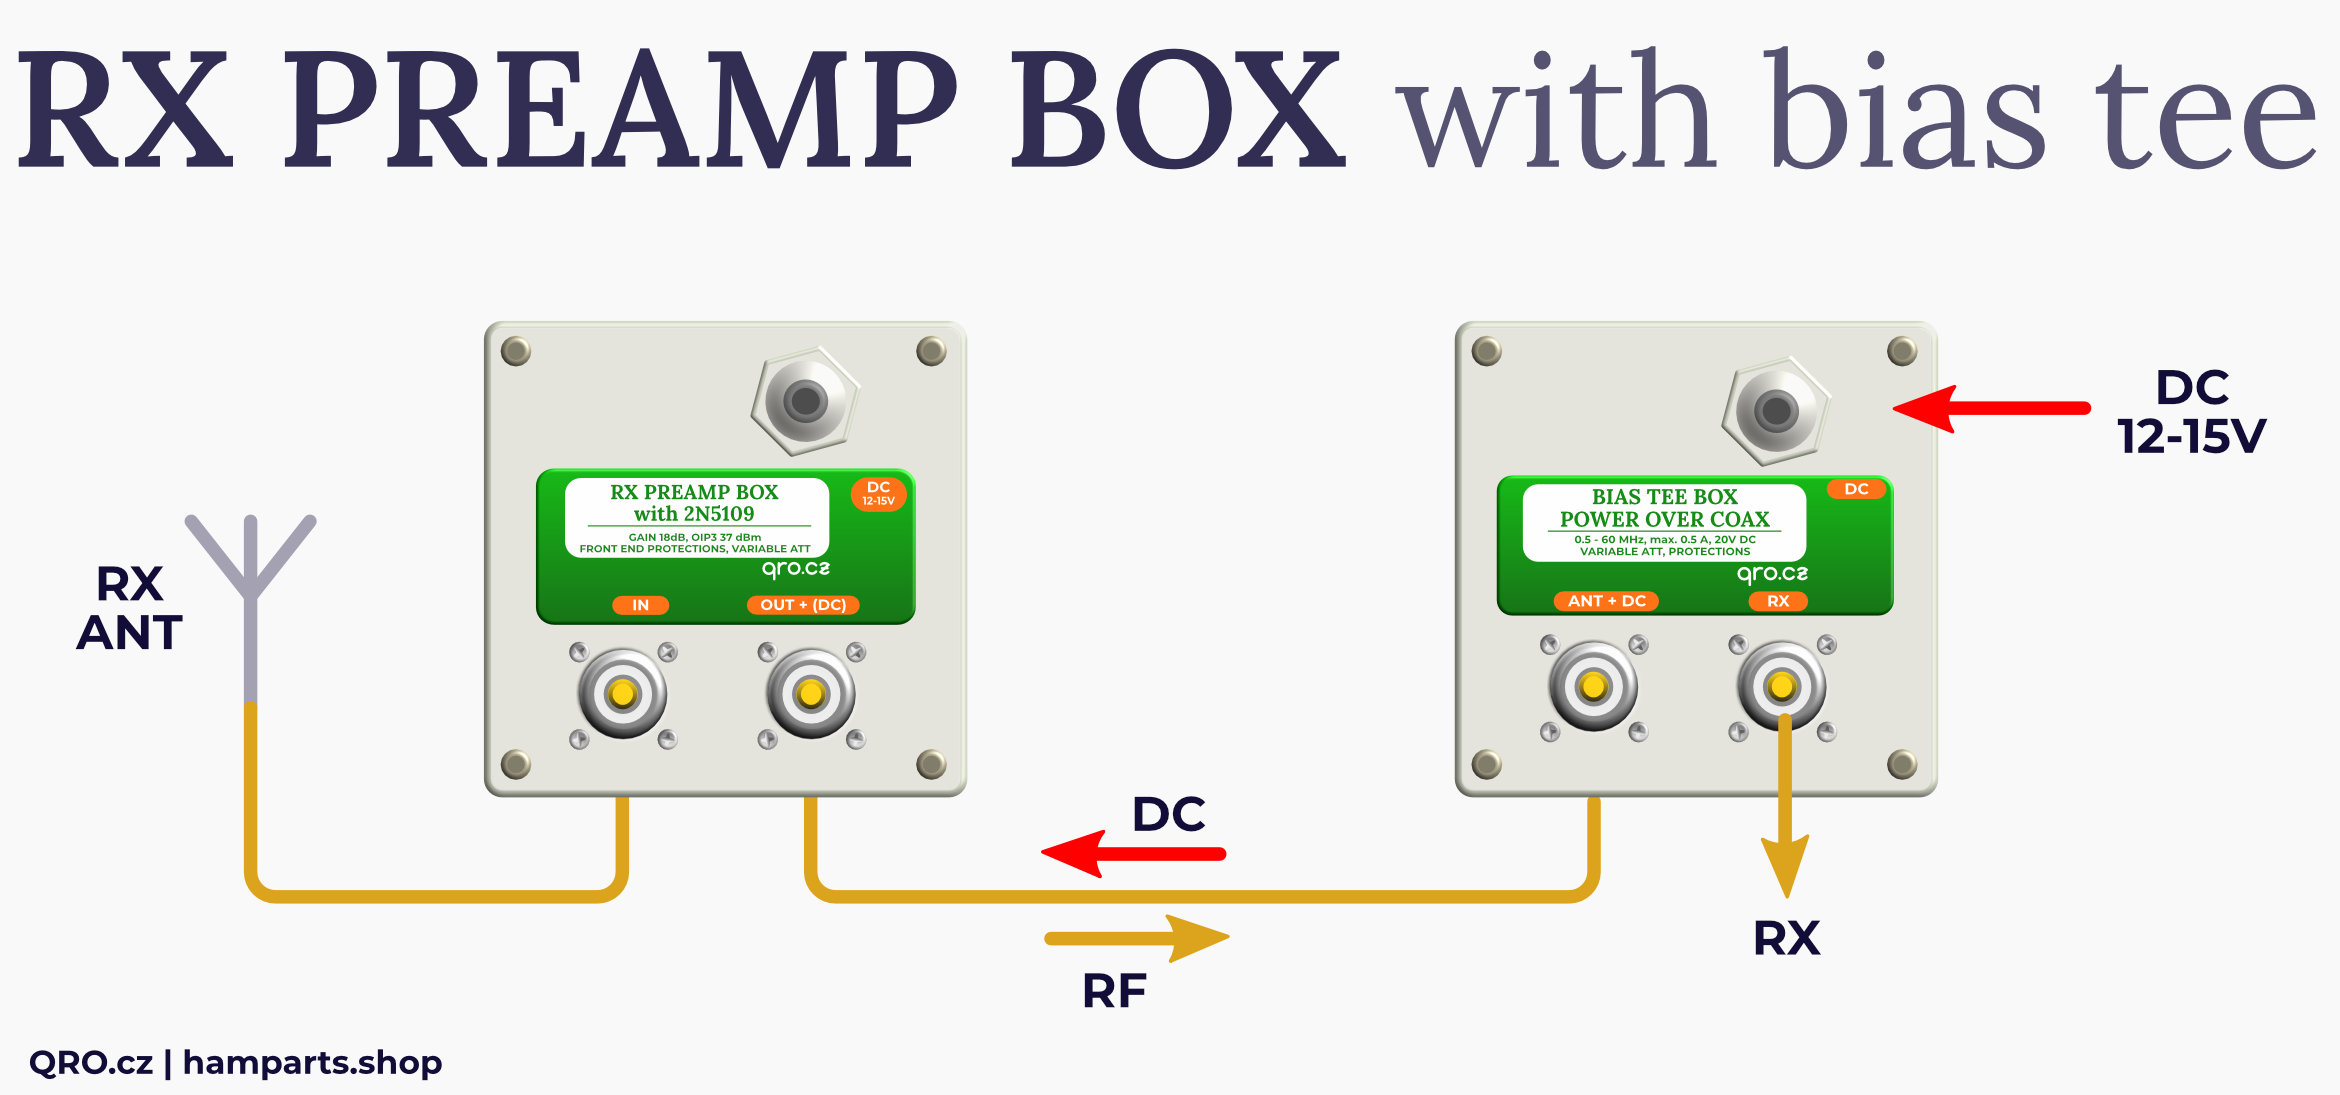 bias tee box dc with rx preamp box qro.cz hamparts.shop